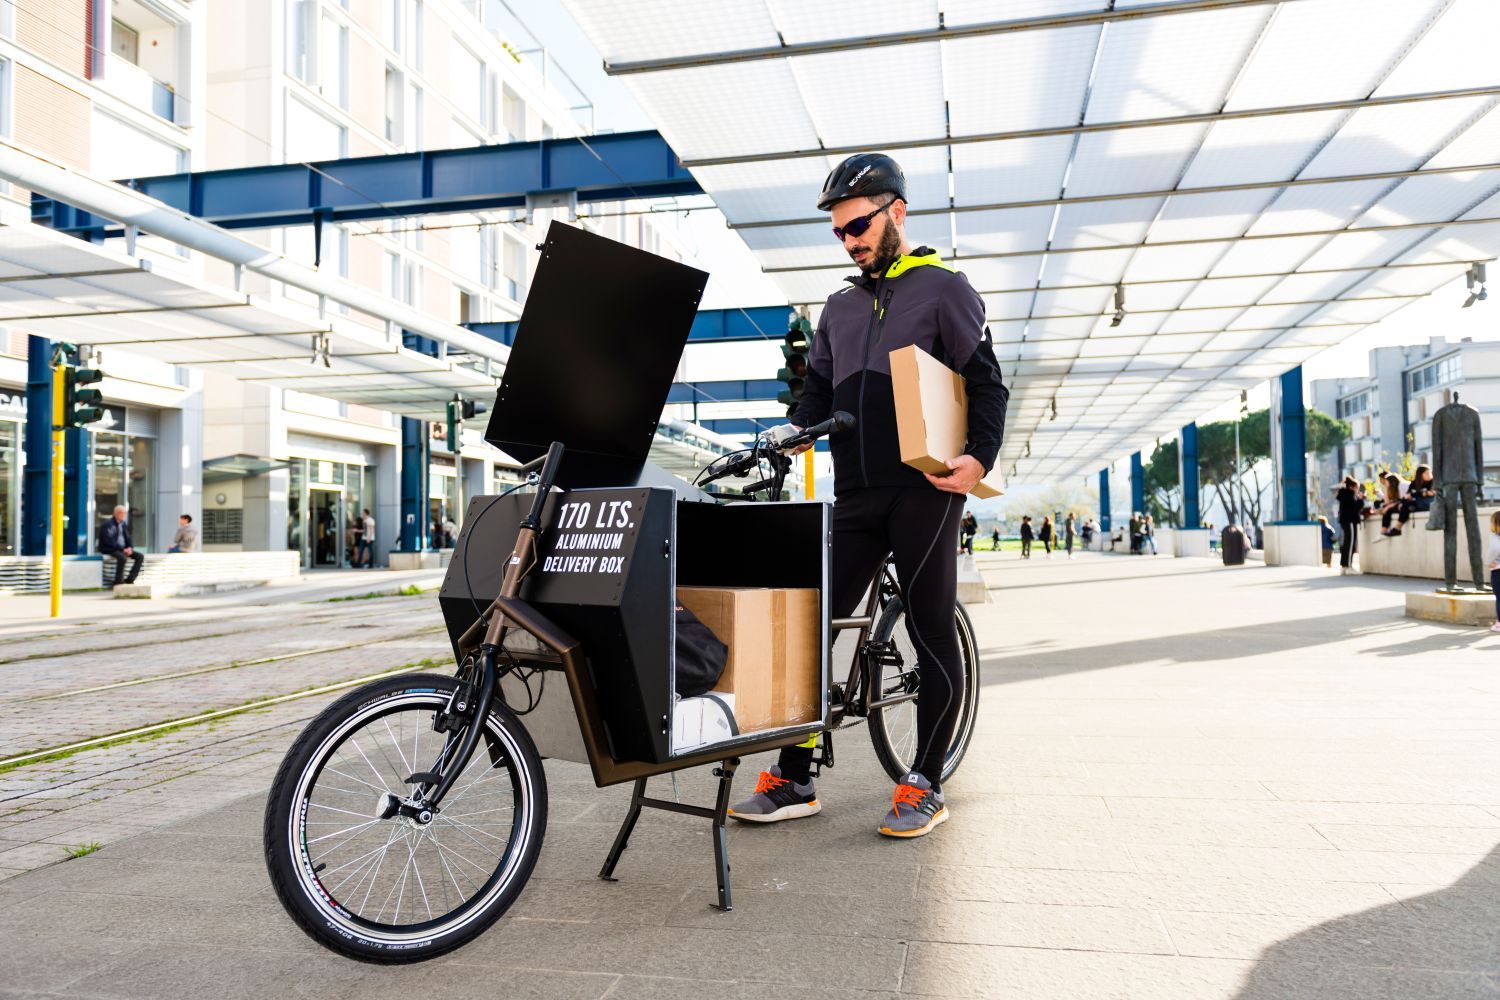 Cargo ebikes: Μία εναλλακτική λύση για παράδοση δεμάτων ή φαγητού